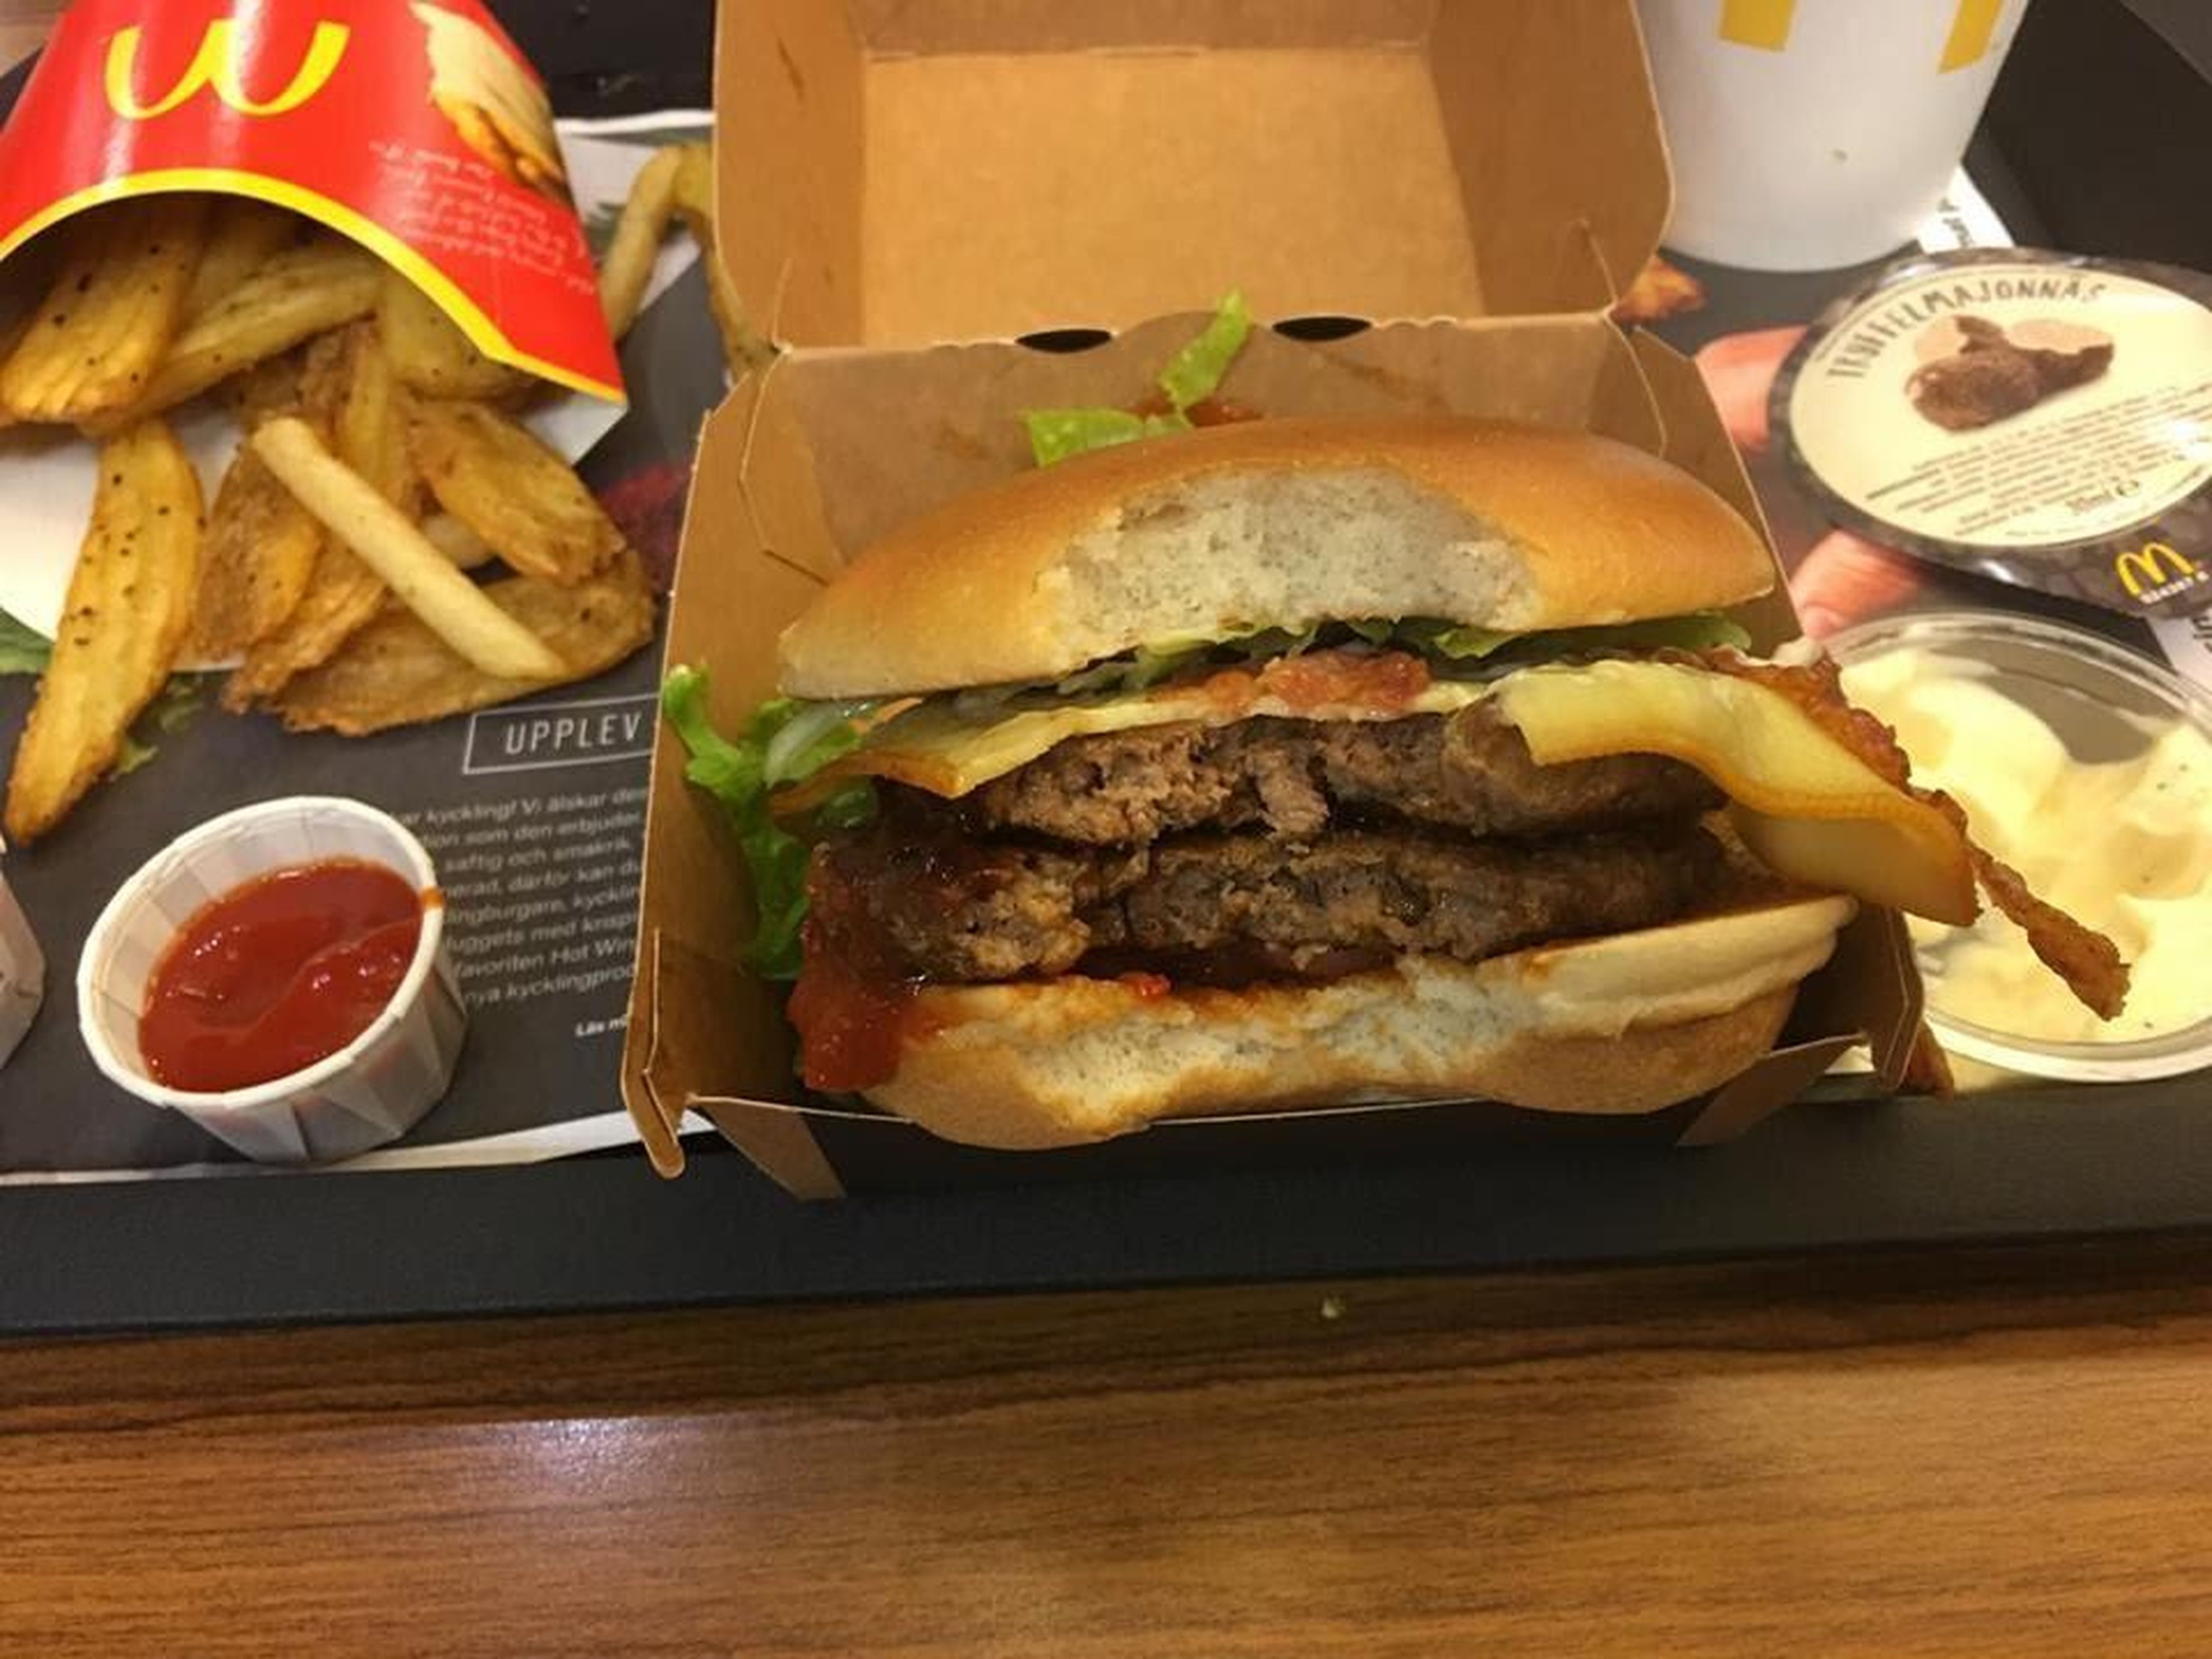 McDonald's asked Swedish chef Johan Jureskog to create a gourmet line of burgers for its restaurants in Sweden.